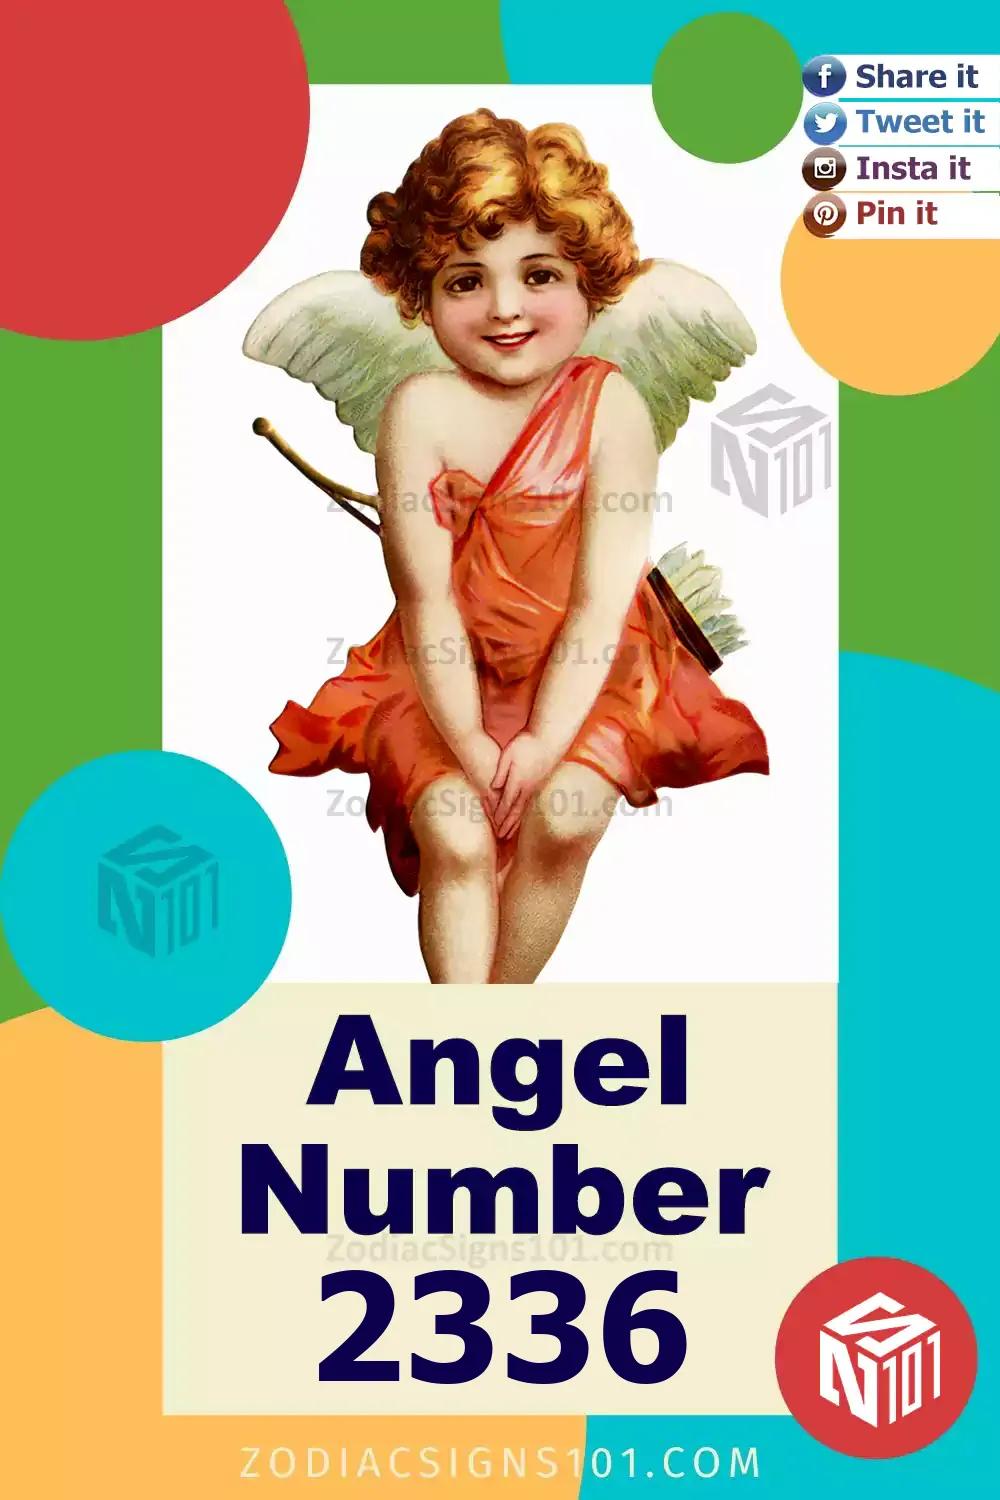 2336-Angel-Number-Meaning.jpg